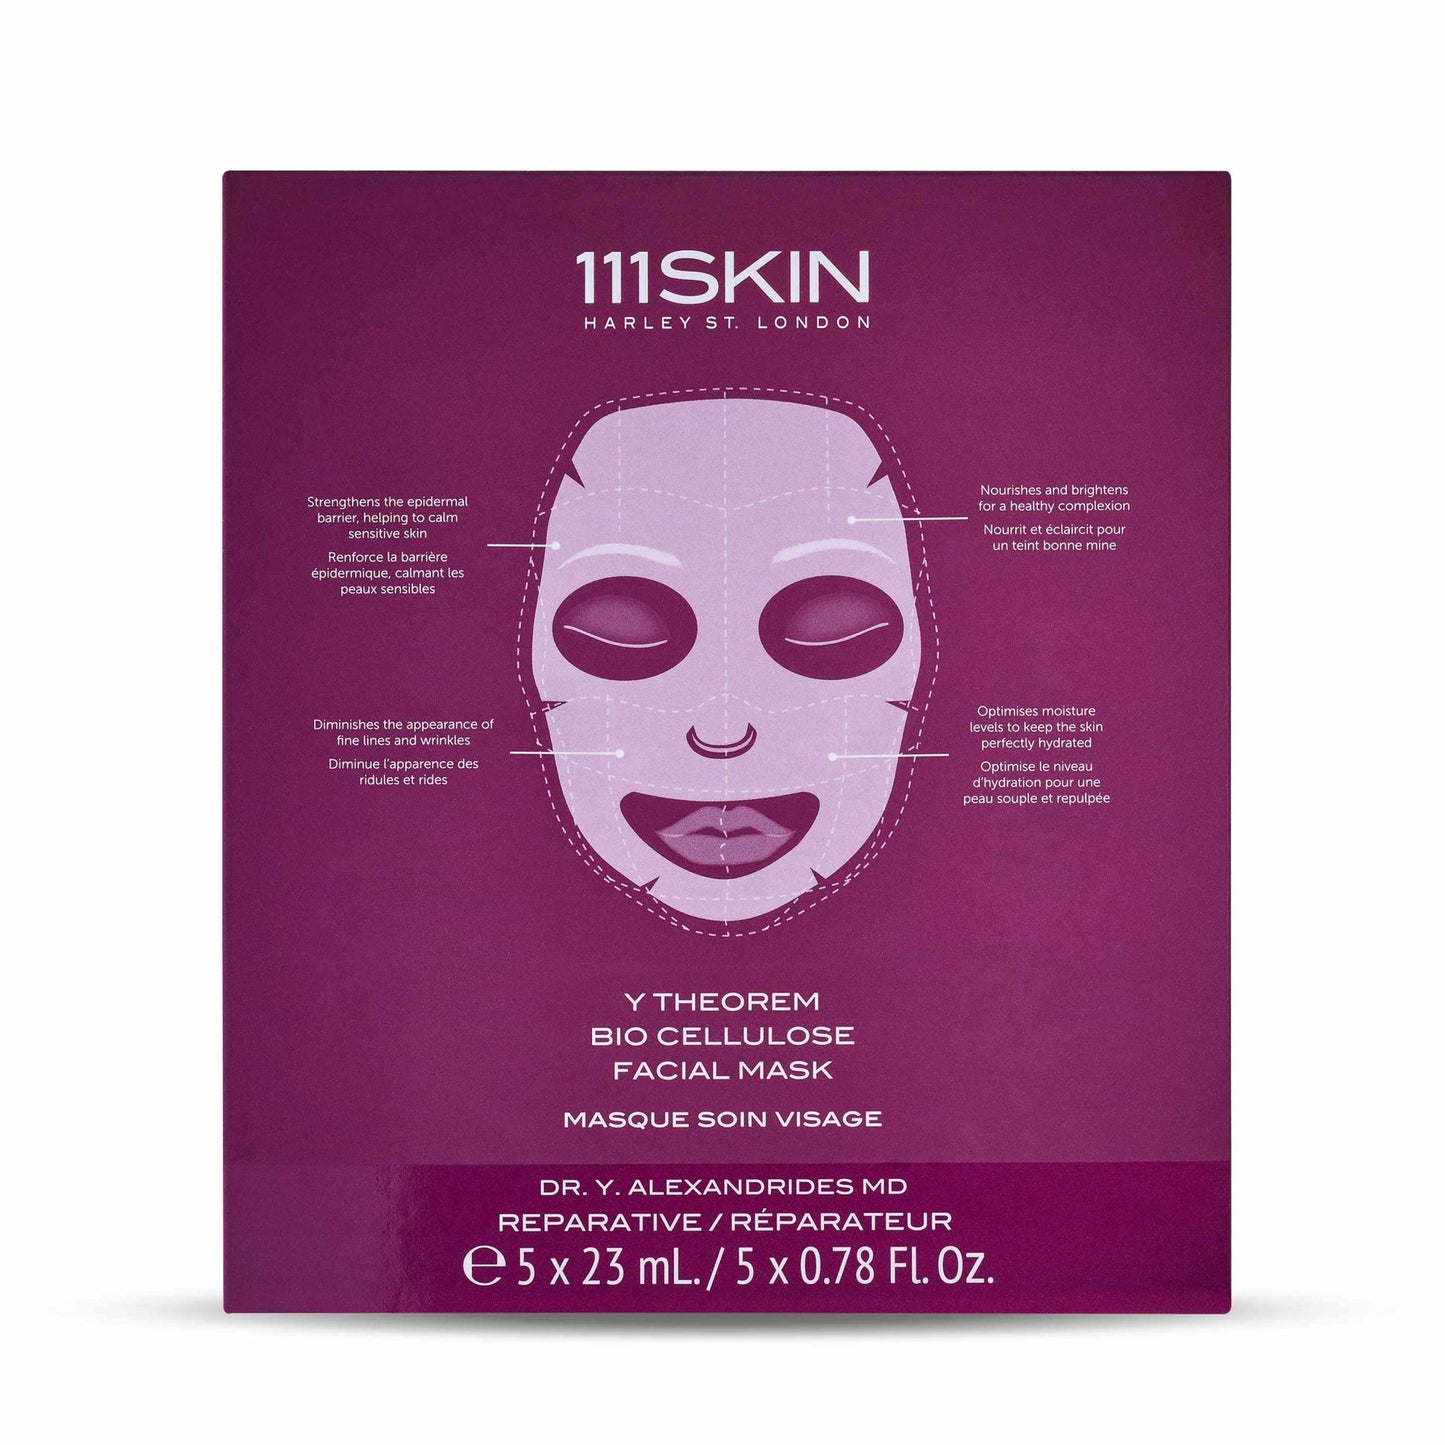 Y Theorem Bio Cellulose Facial Mask - 111SKIN